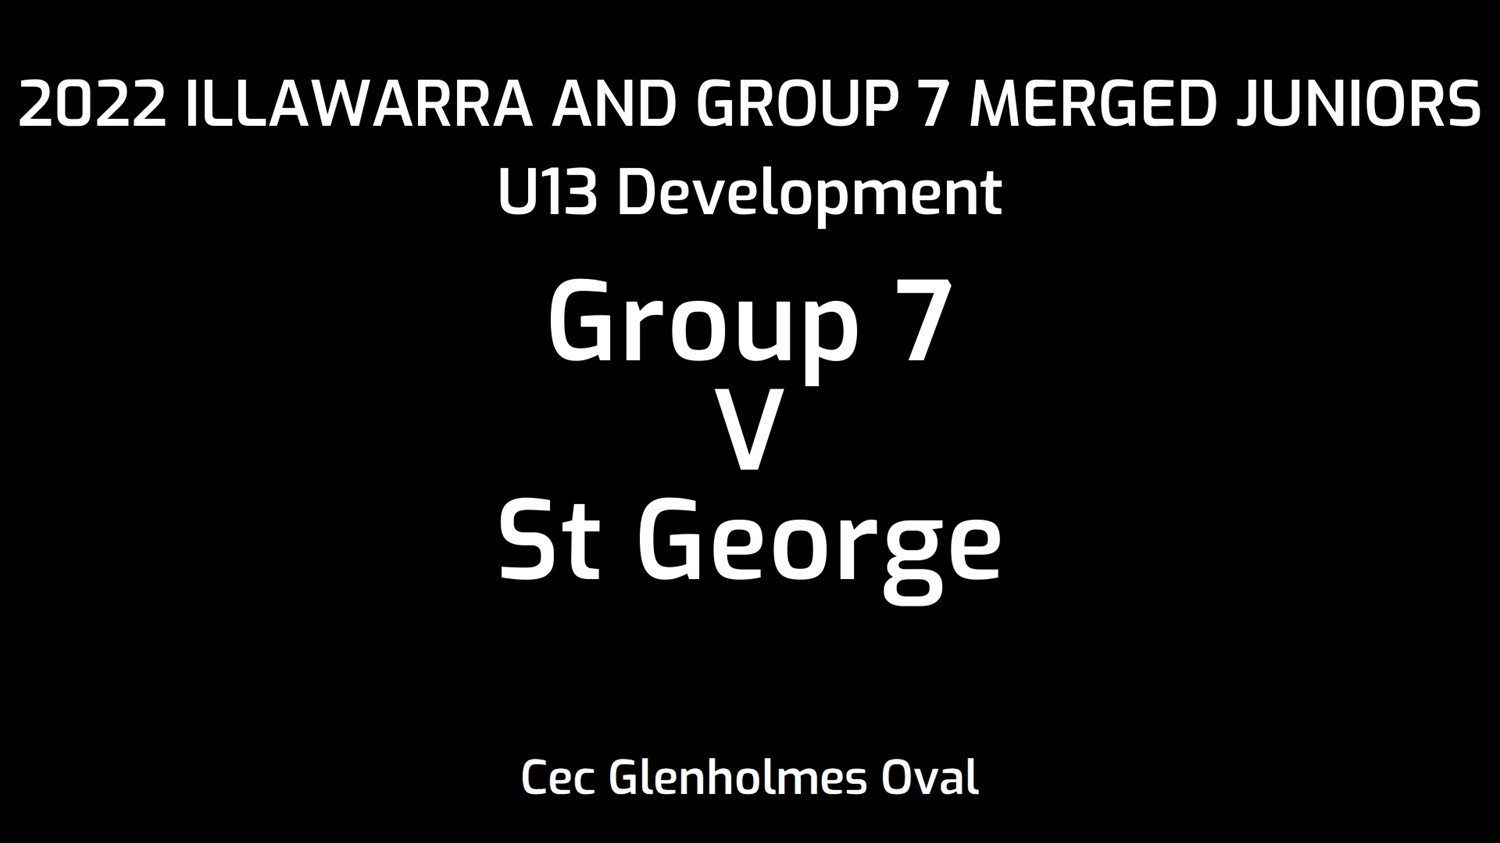 220924-Illawarra and Group 7 Merged Juniors U13 Development - Group 7 v St George Dragons Minigame Slate Image